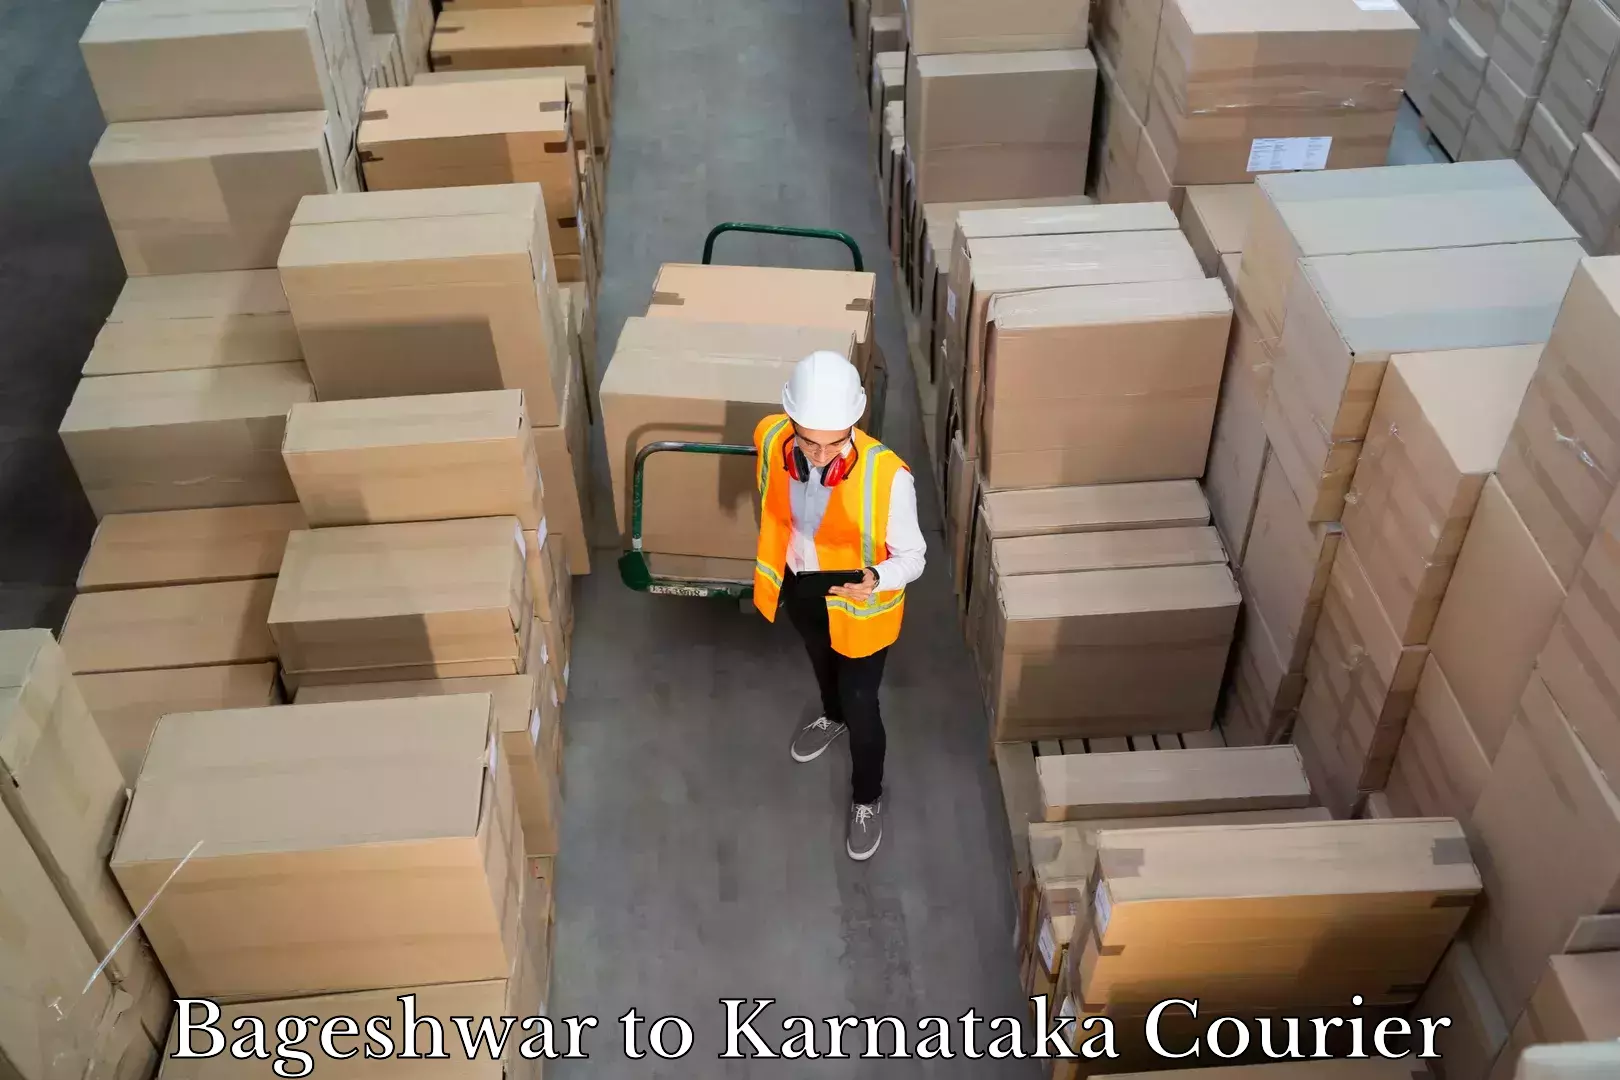 Baggage delivery scheduling Bageshwar to Karnataka